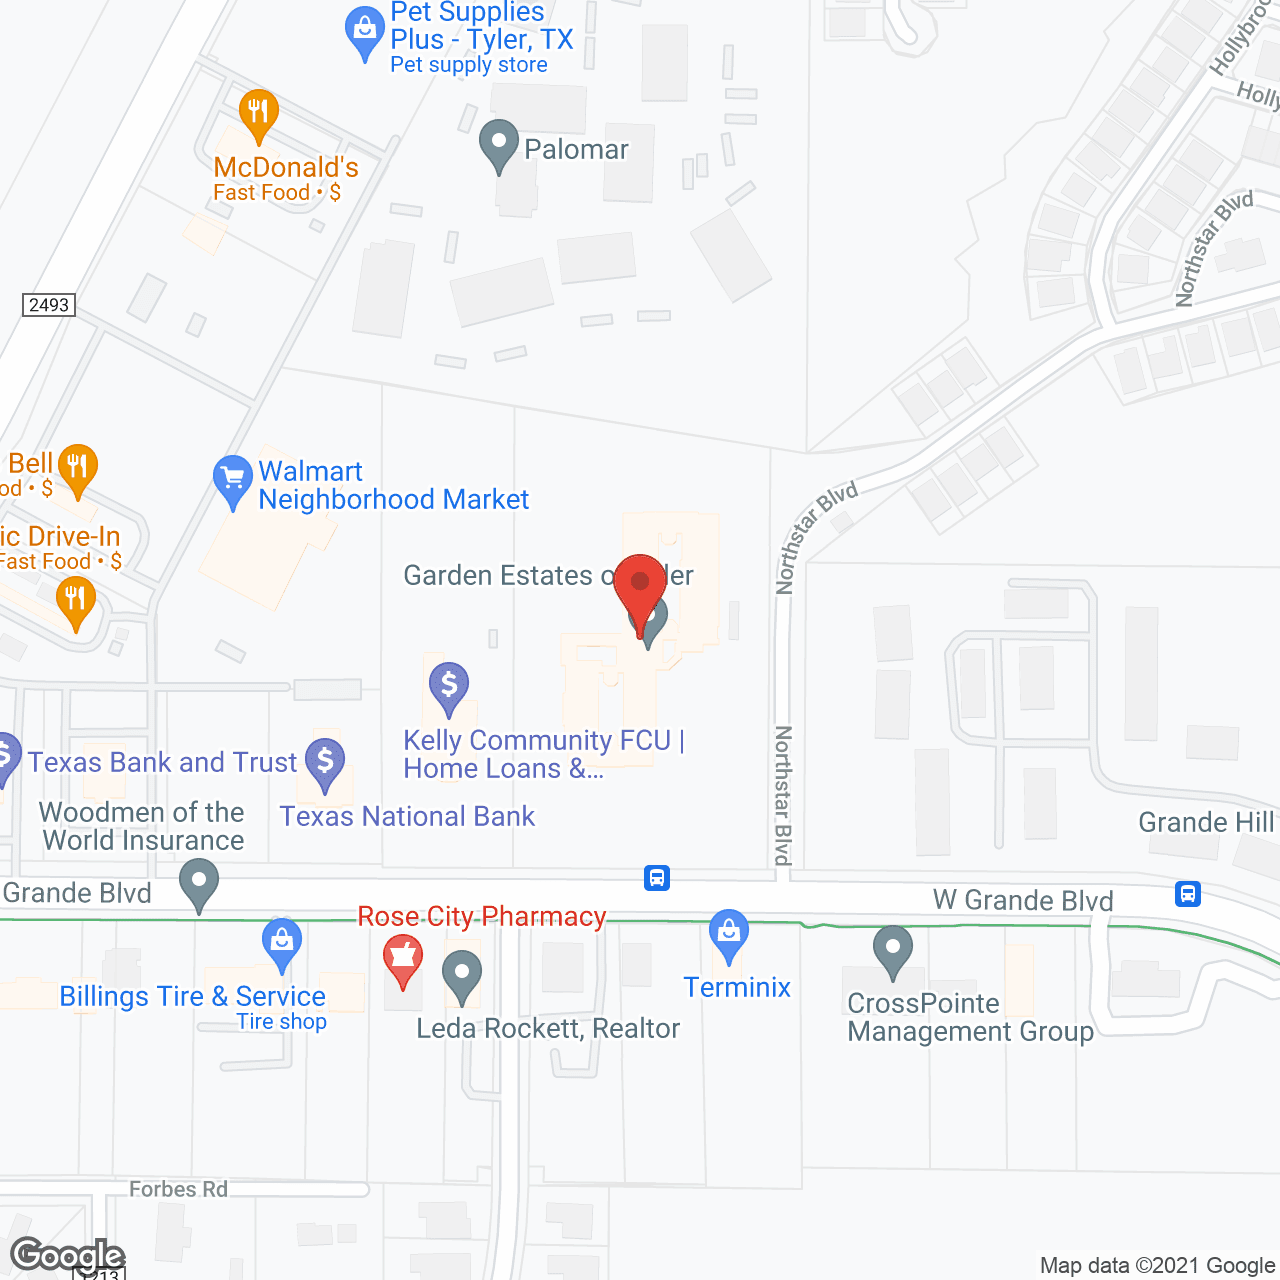 Garden Estates of Tyler in google map